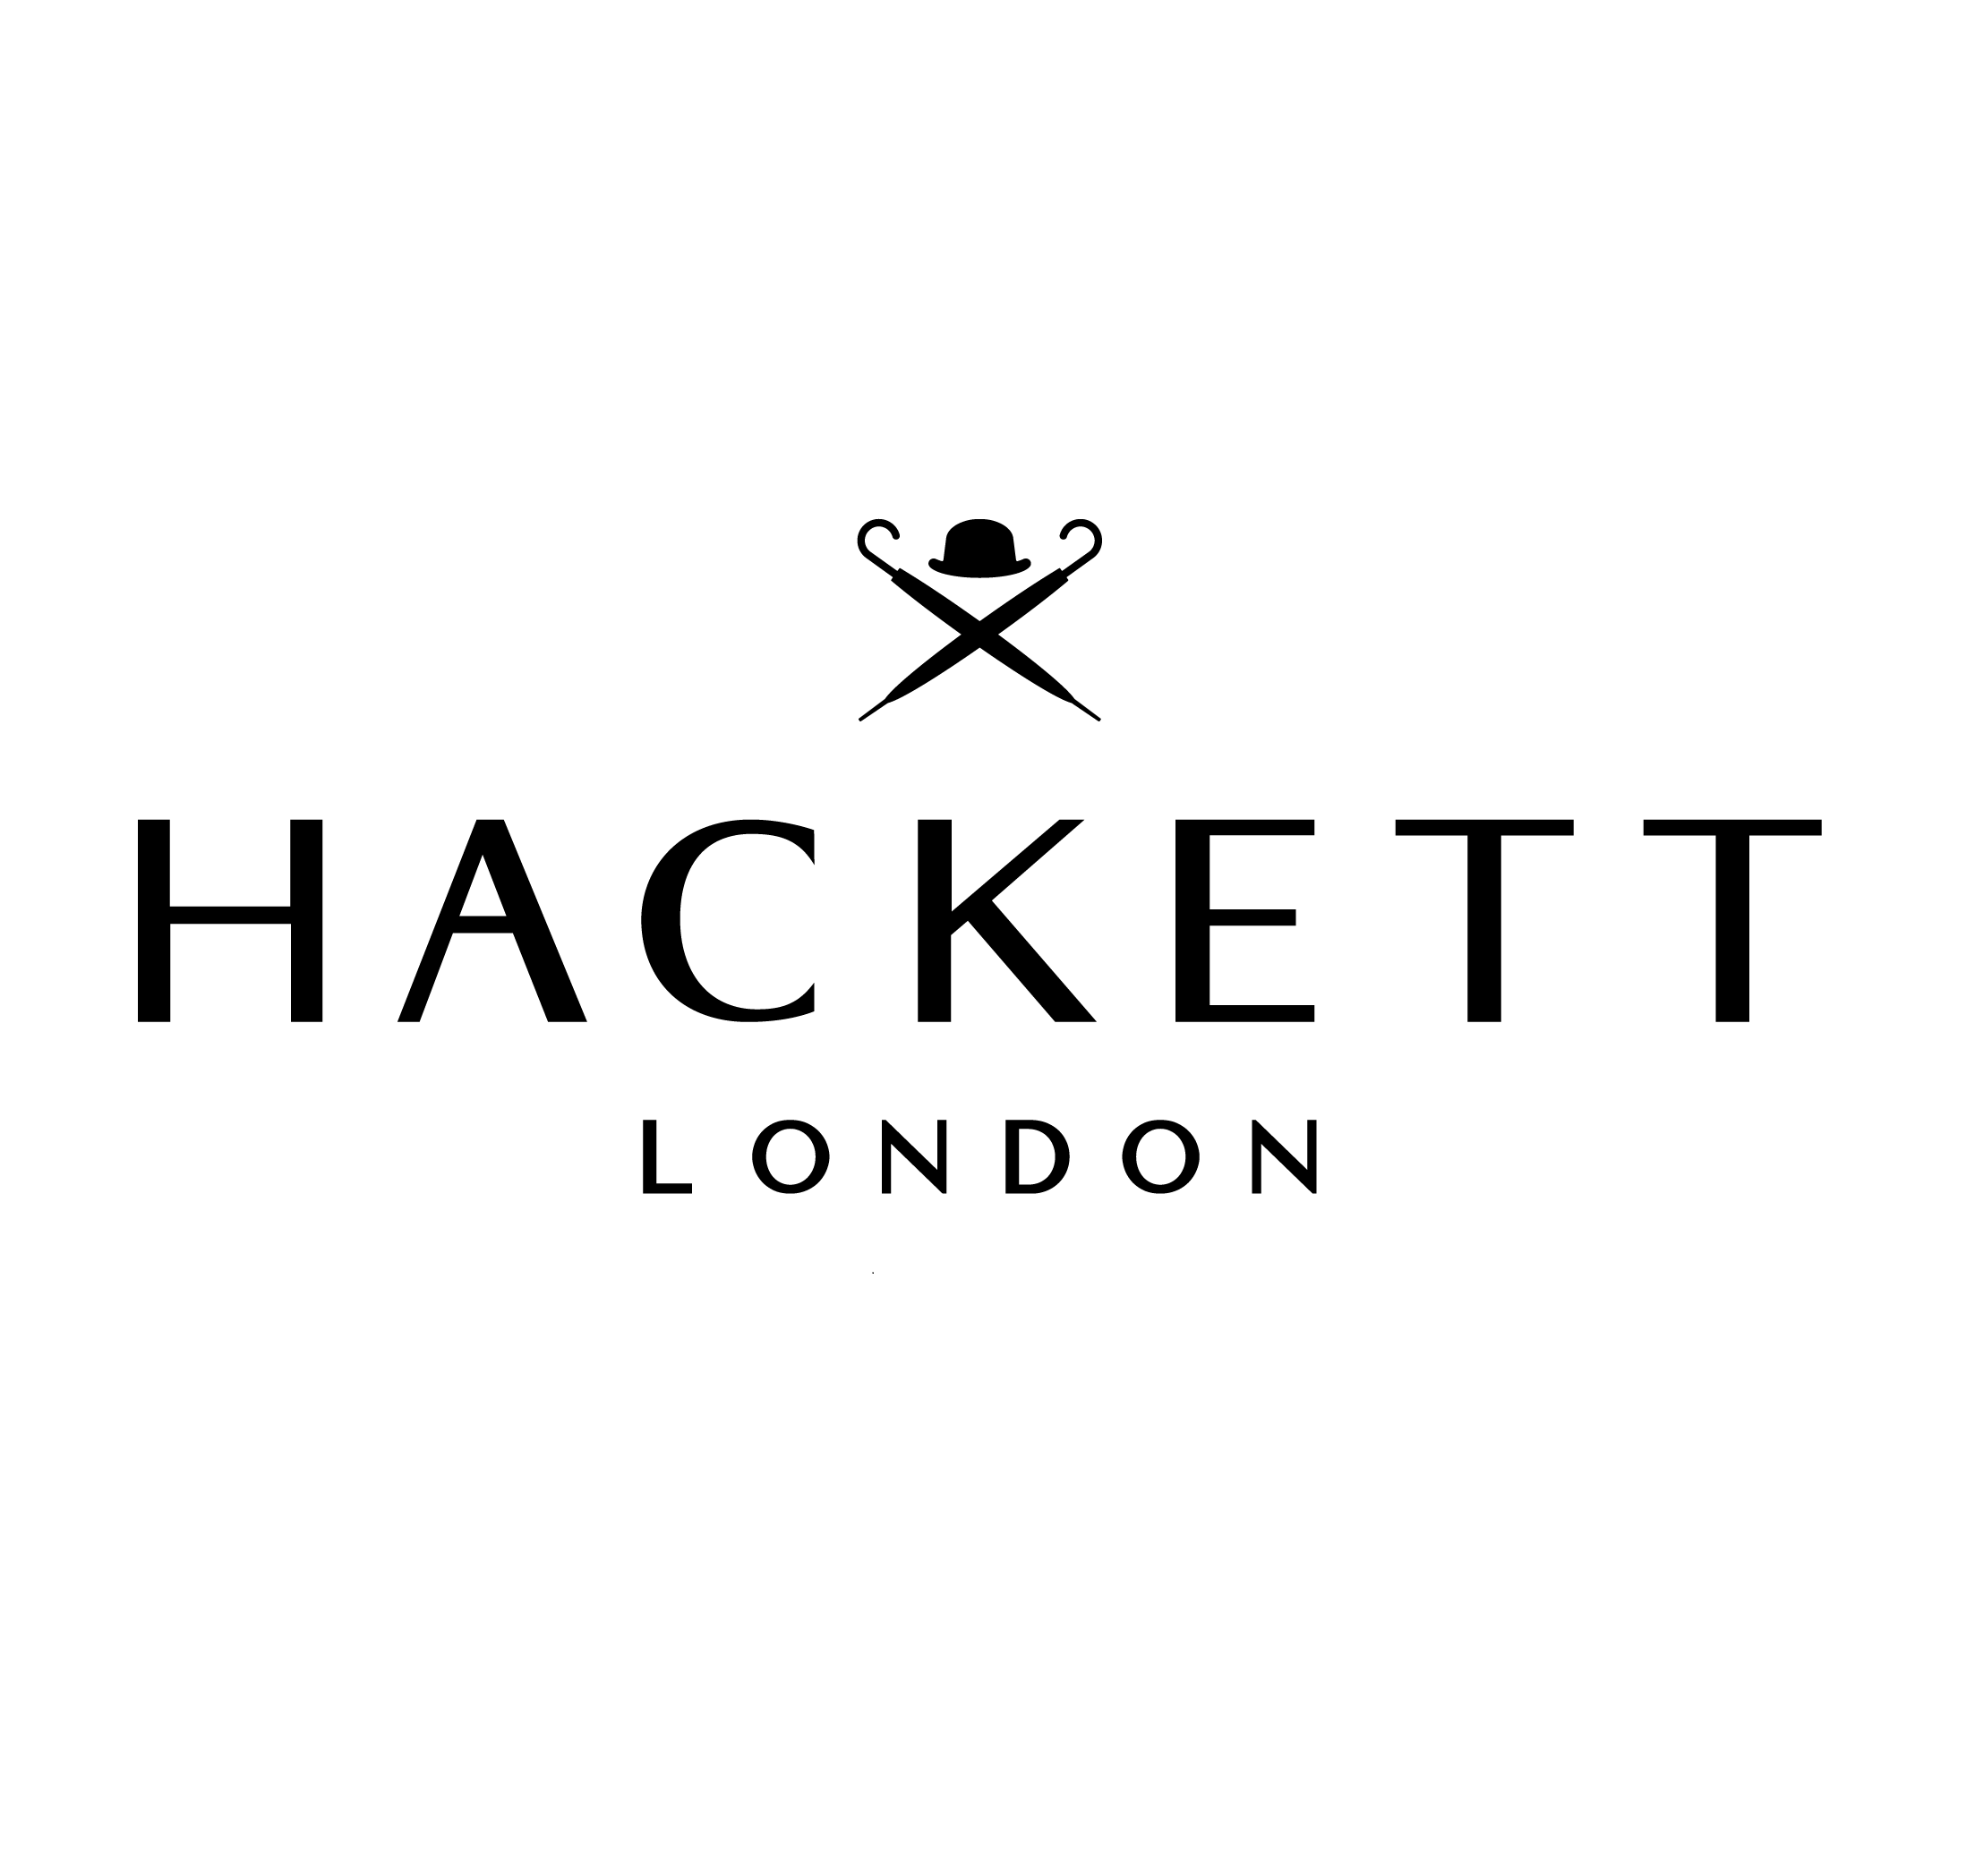 Images Hackett London George Street